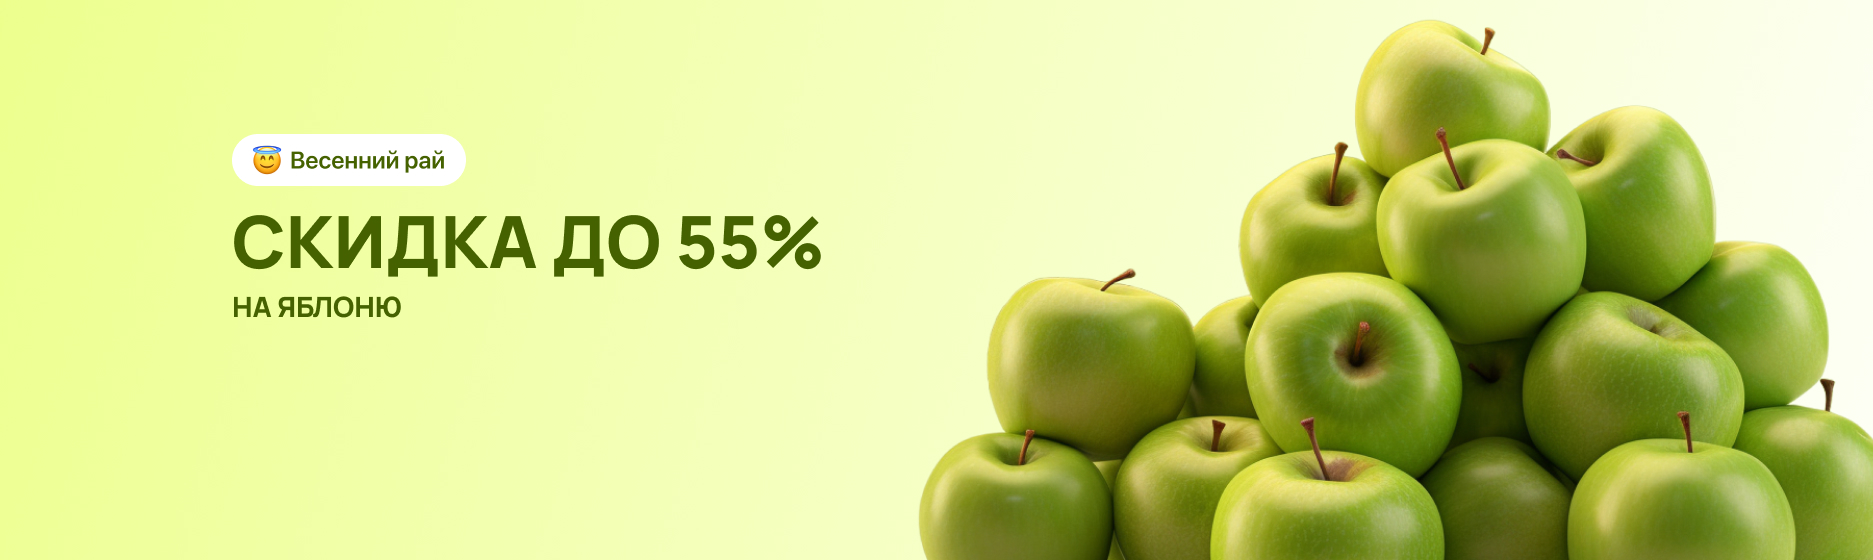 Яблоня со скидкой до 55%